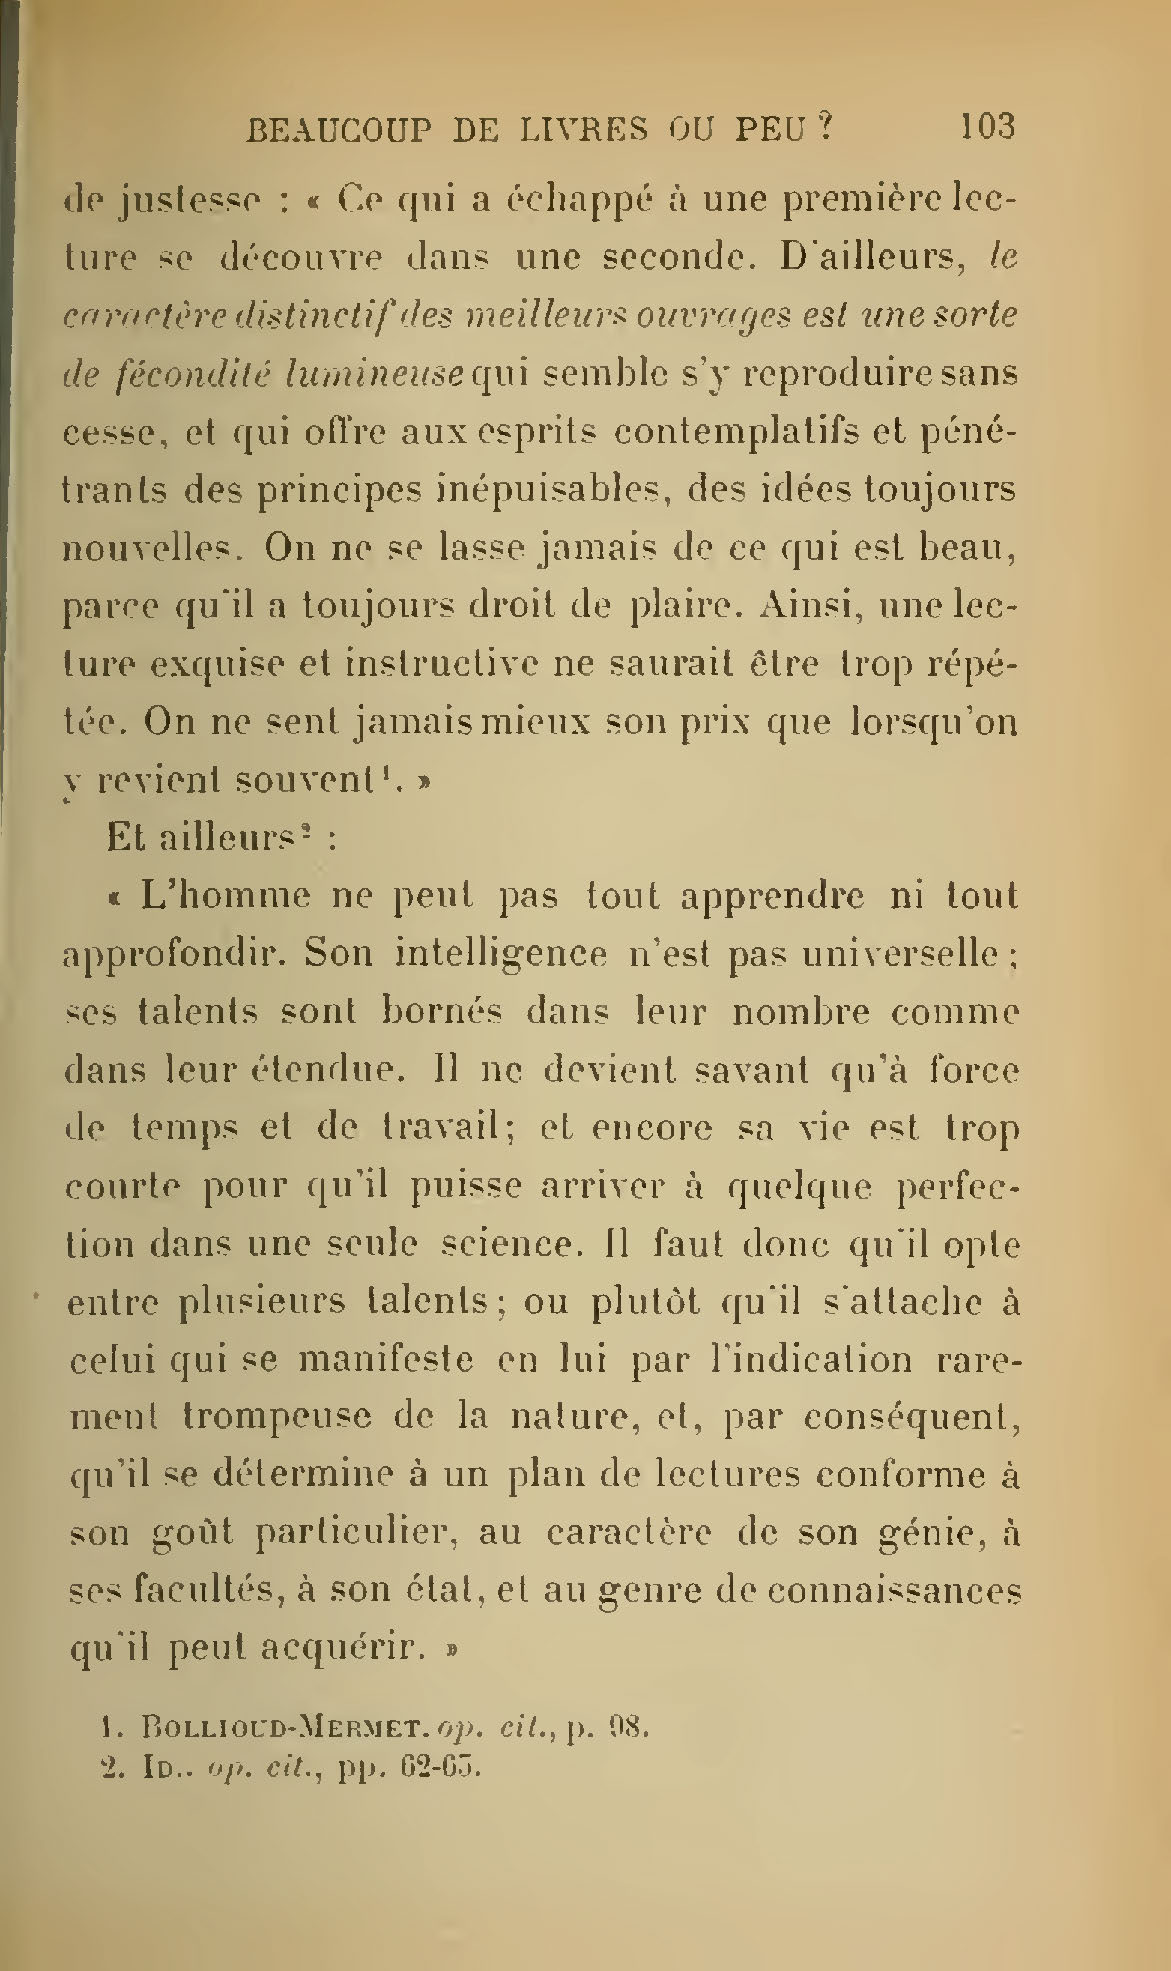 Albert Cim, Le Livre, t. II, p. 103.